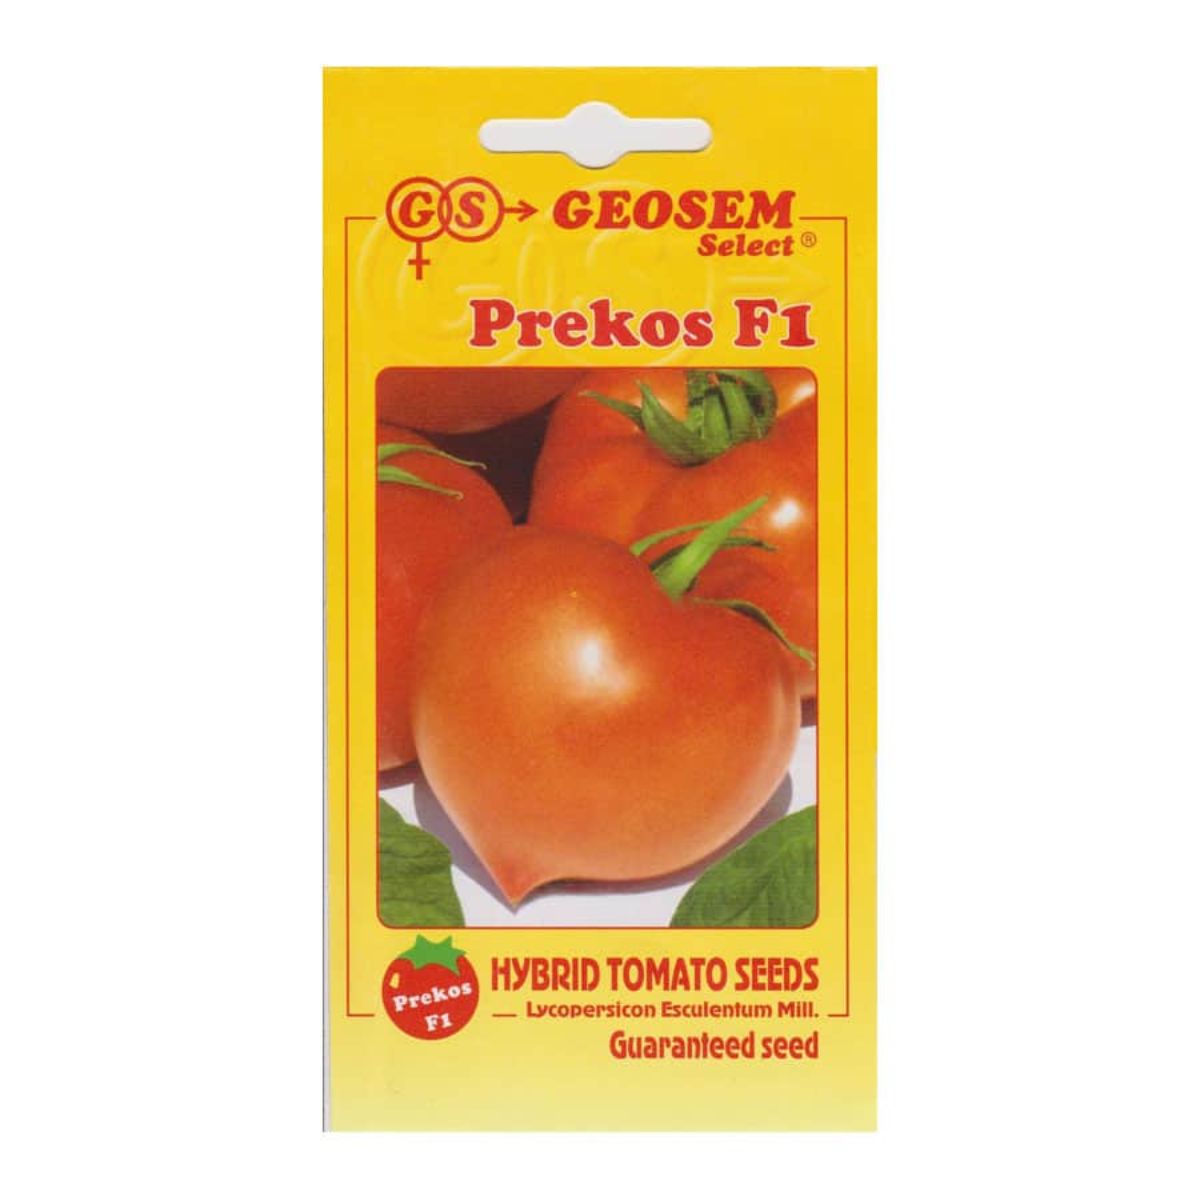 Tomate - Seminte Tomate semideterminate PREKOS F1 Geosem Select 250 seminte, hectarul.ro